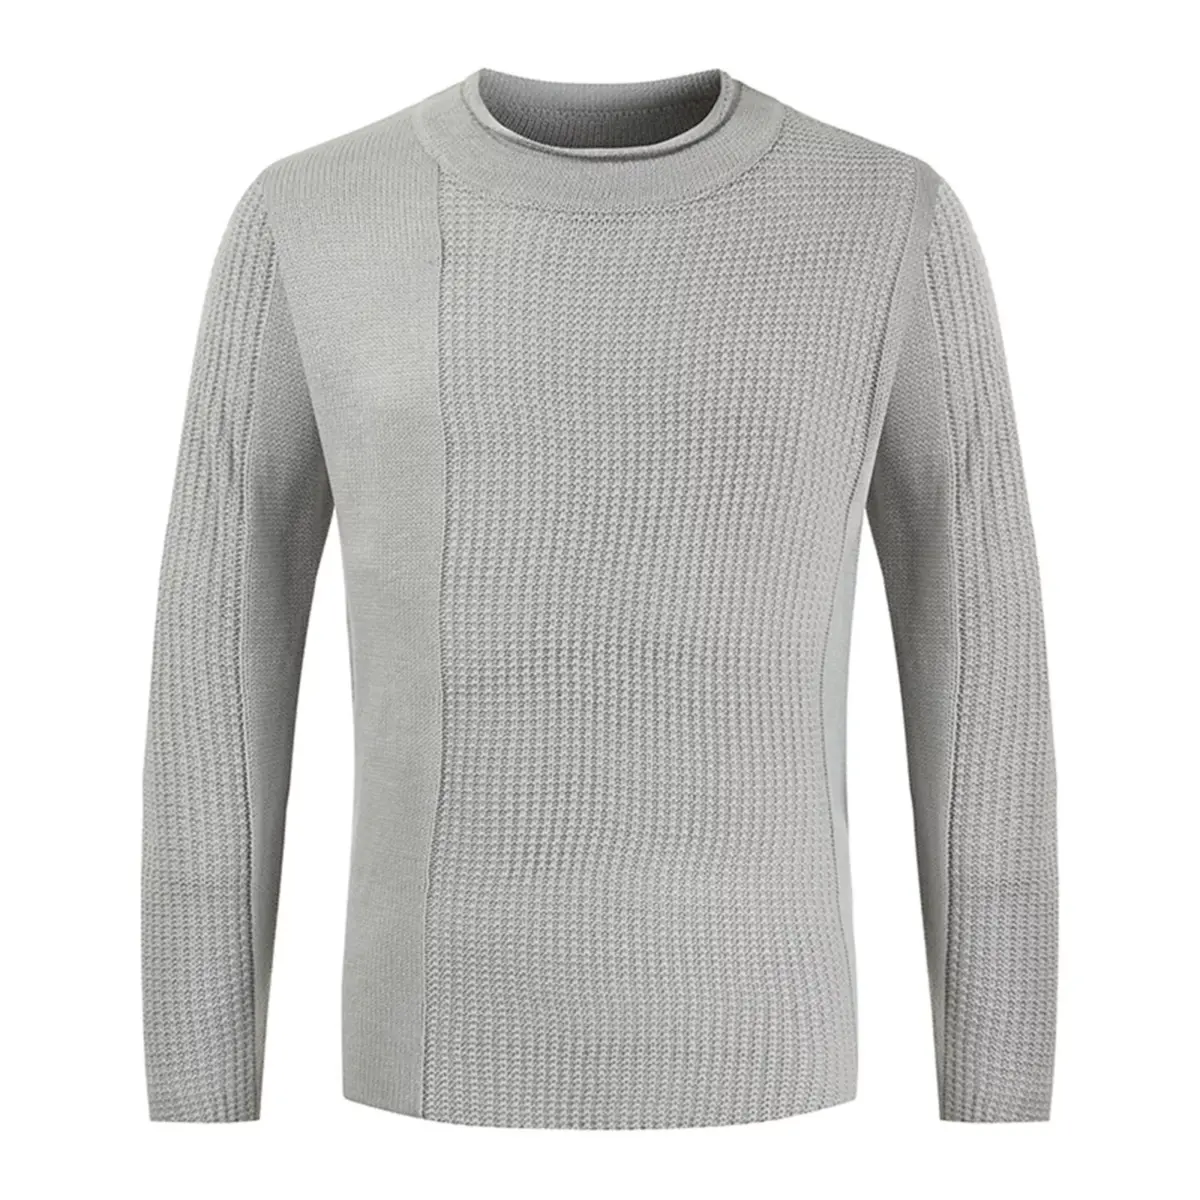 Men’s Winter Sweaters Stand Collar V-Neck, Lightweight Casual Sportswear Gray